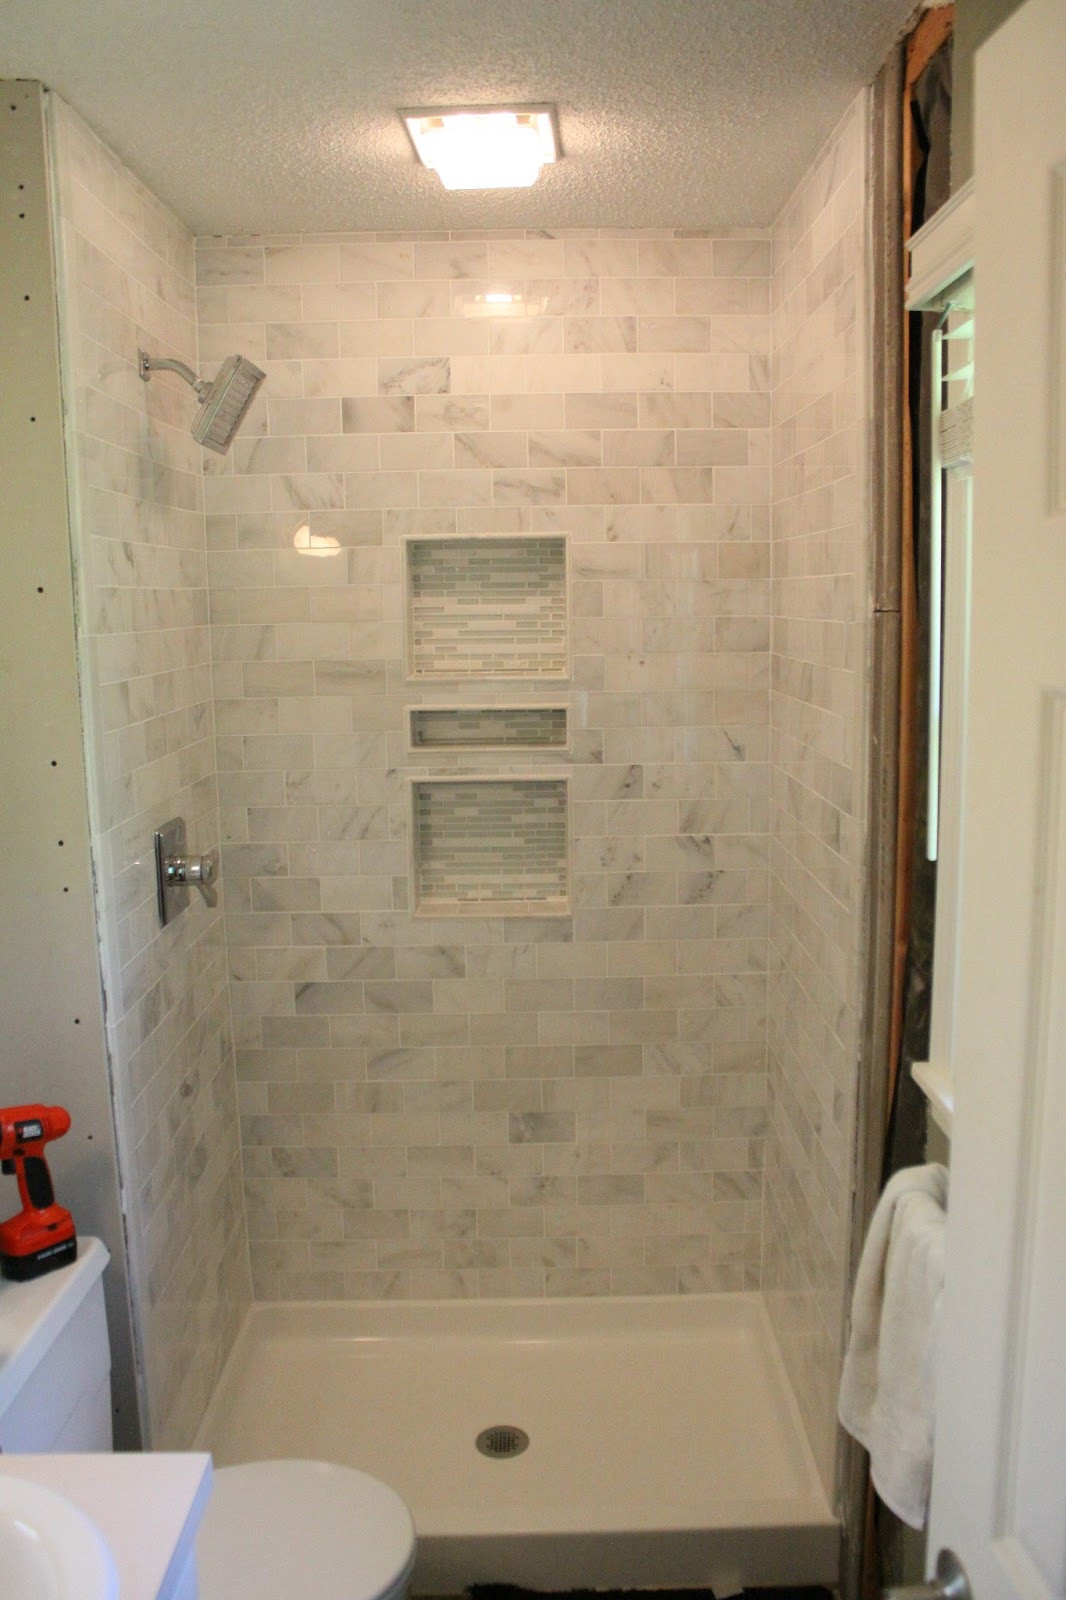 Lowes Bathroom Shower Tile
 Lowes Bathroom